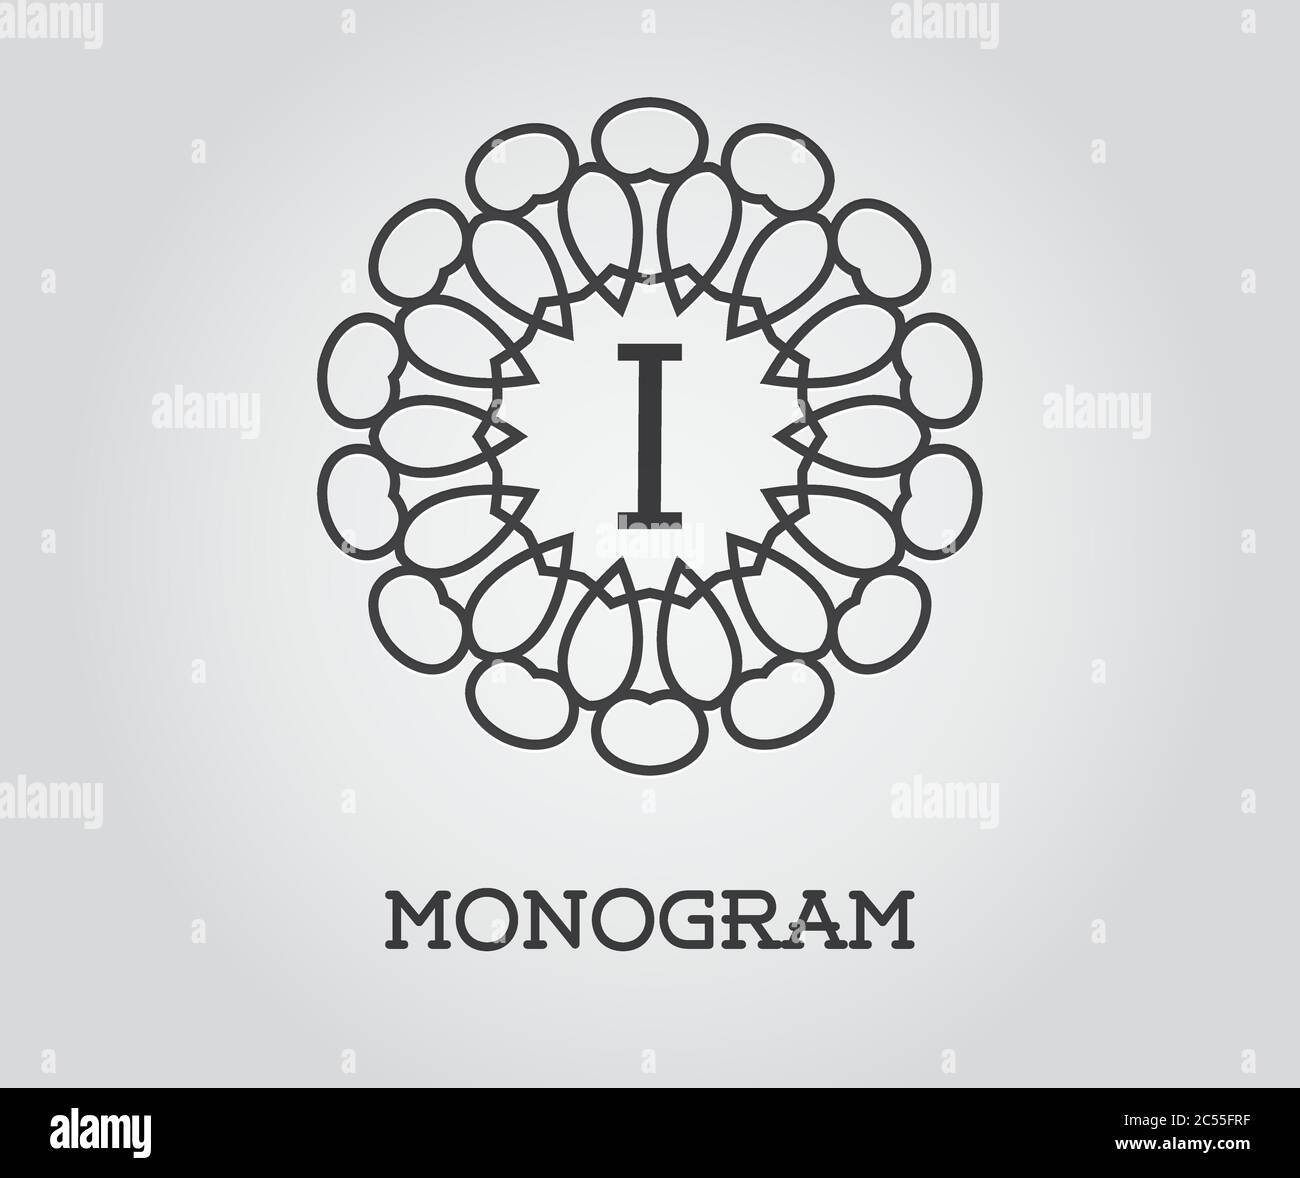 Monogram Design Template with Letter Vector Illustration Premium Elegant Quality Stock Vector